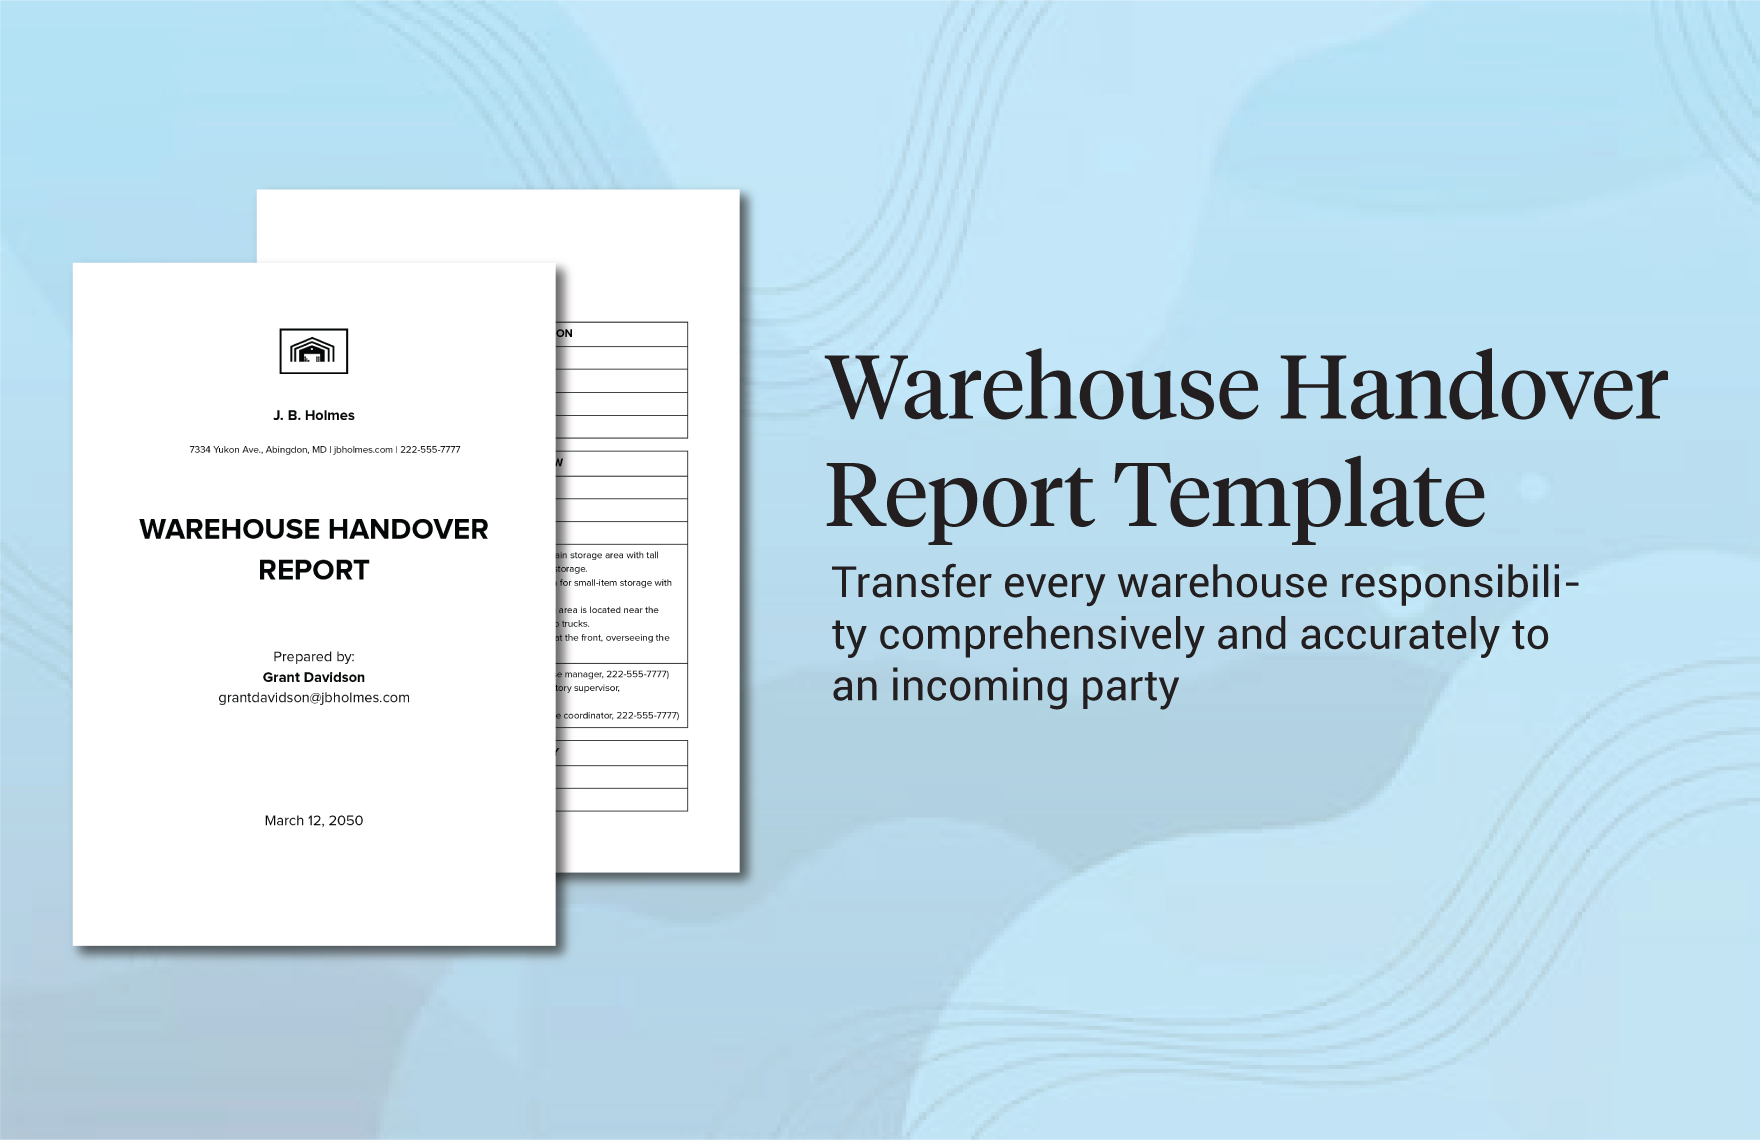 Warehouse Handover Report Template in Word, Google Docs, PDF